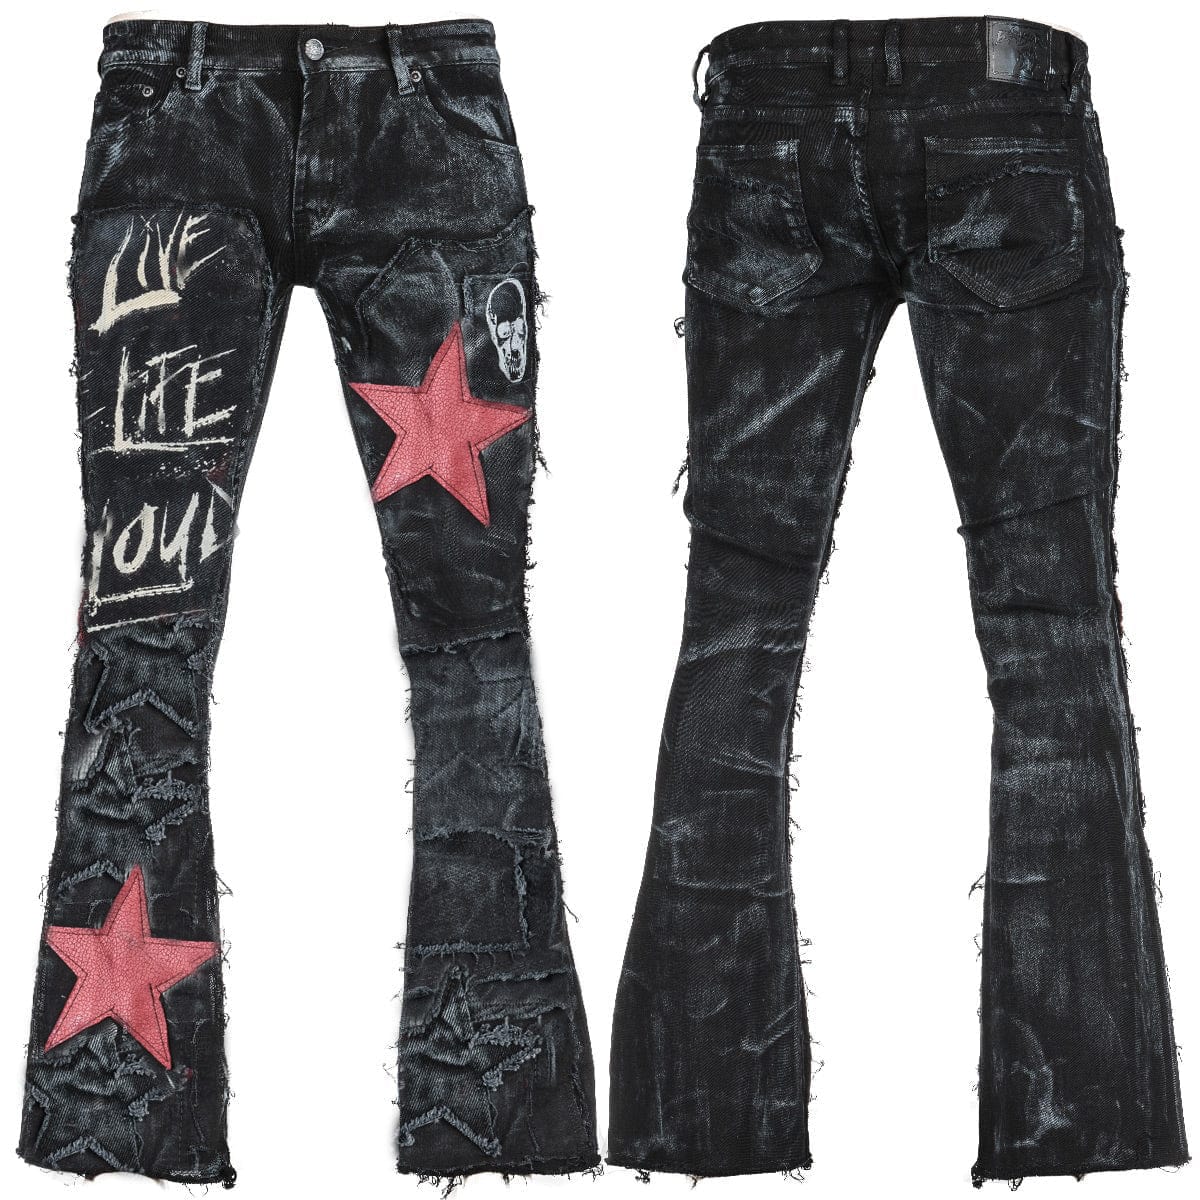 Custom Chop Shop Pants Wornstar Custom - Jeans - Live Life Loud MTO